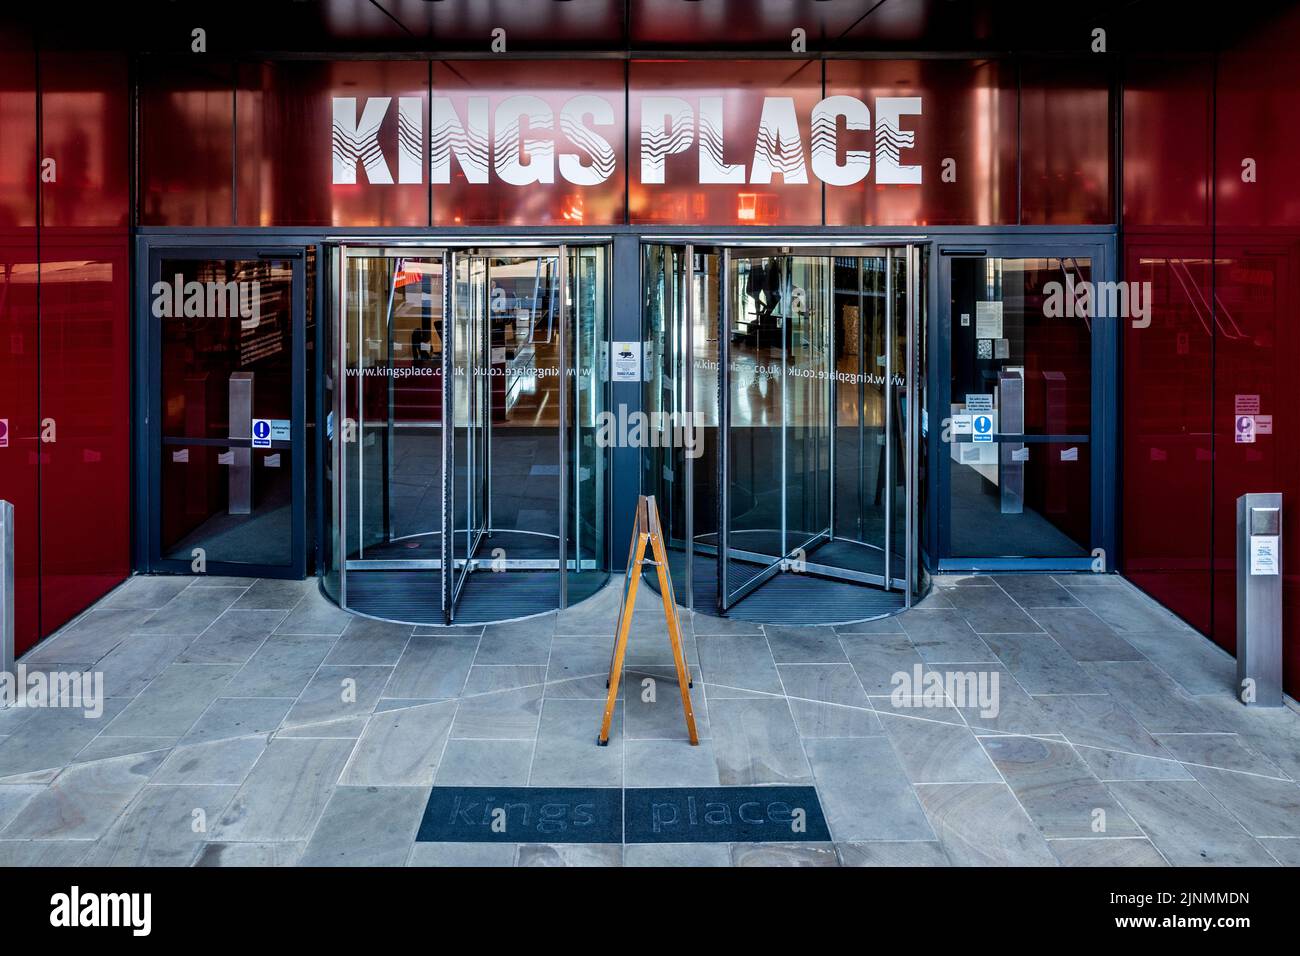 Kings Place London Entrance - Kings Place enthält Konzerträume, Kunstgalerien und Geschäftsbüros. Architekt Dixon Jones 2008. Stockfoto